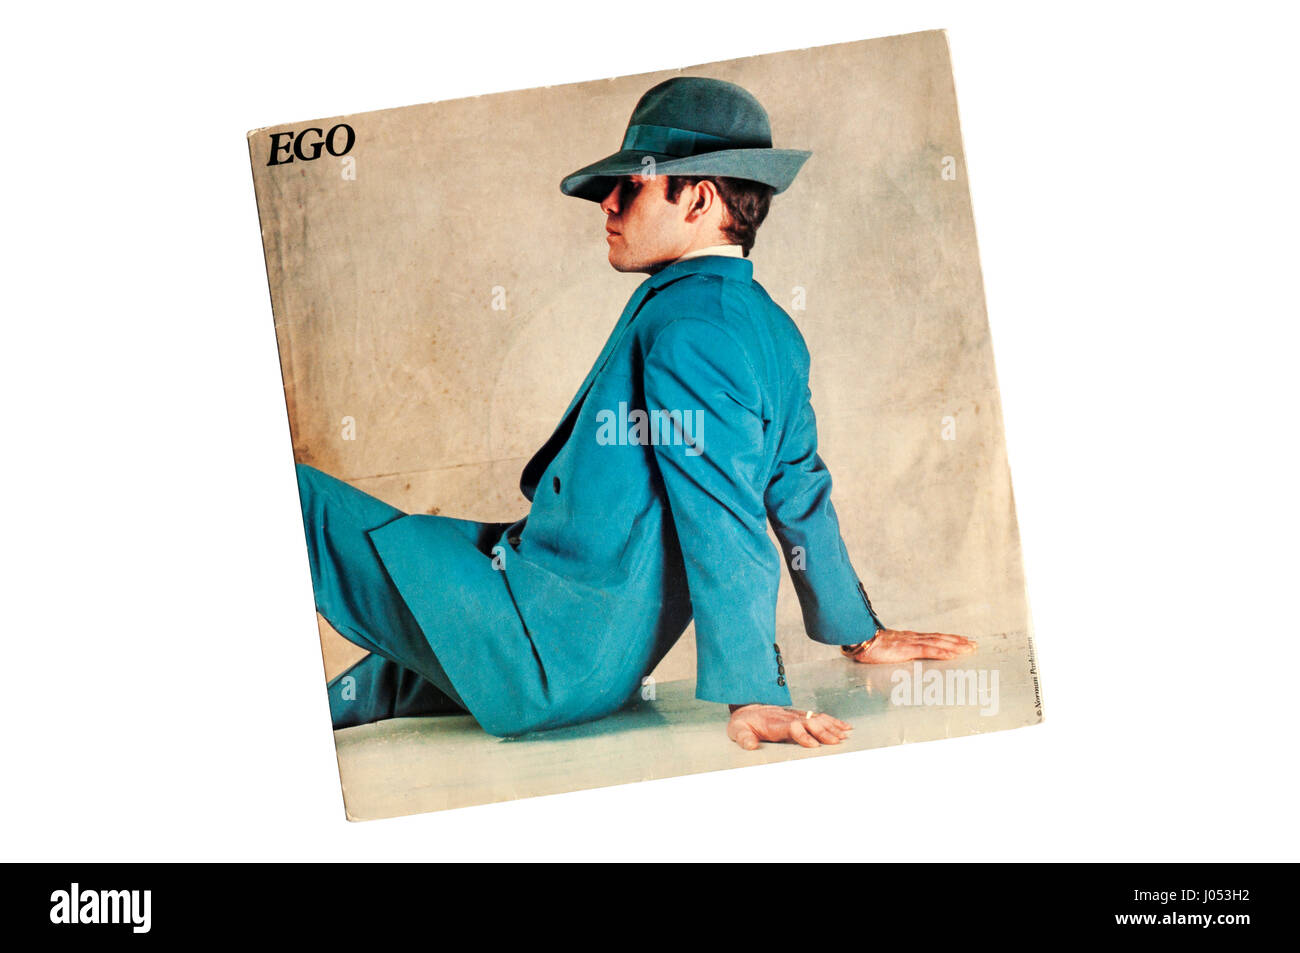 Ego was a single by Elton John.  It was released in 1978. Stock Photo